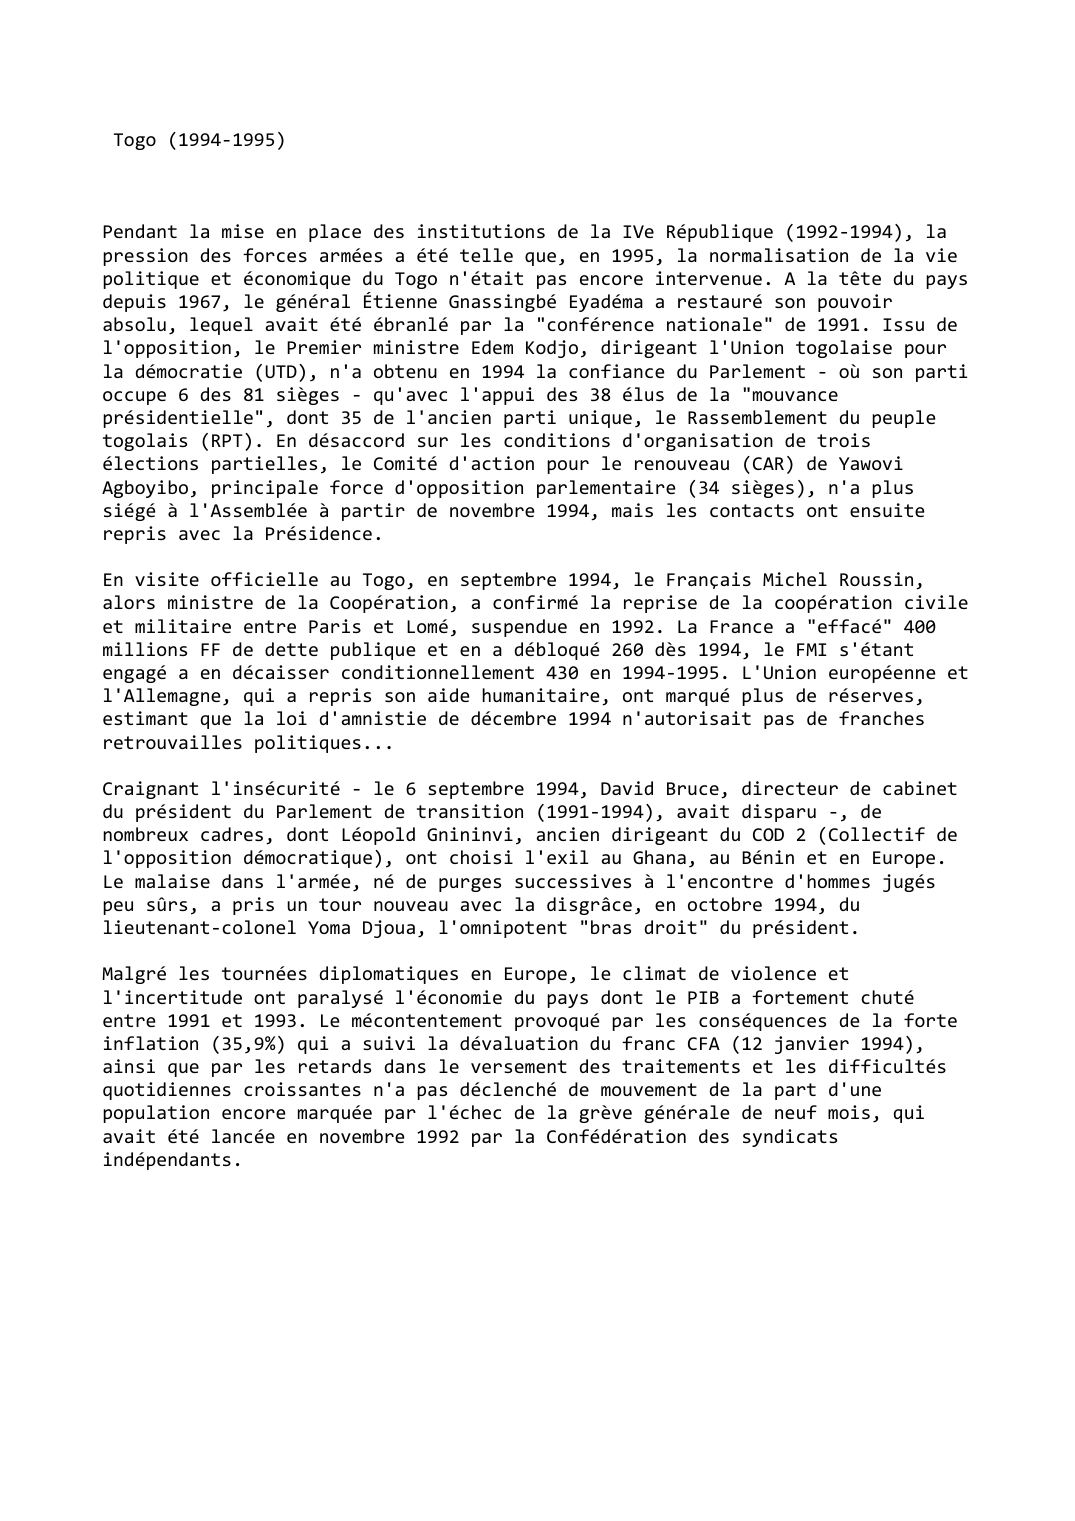 Prévisualisation du document Togo (1994-1995)